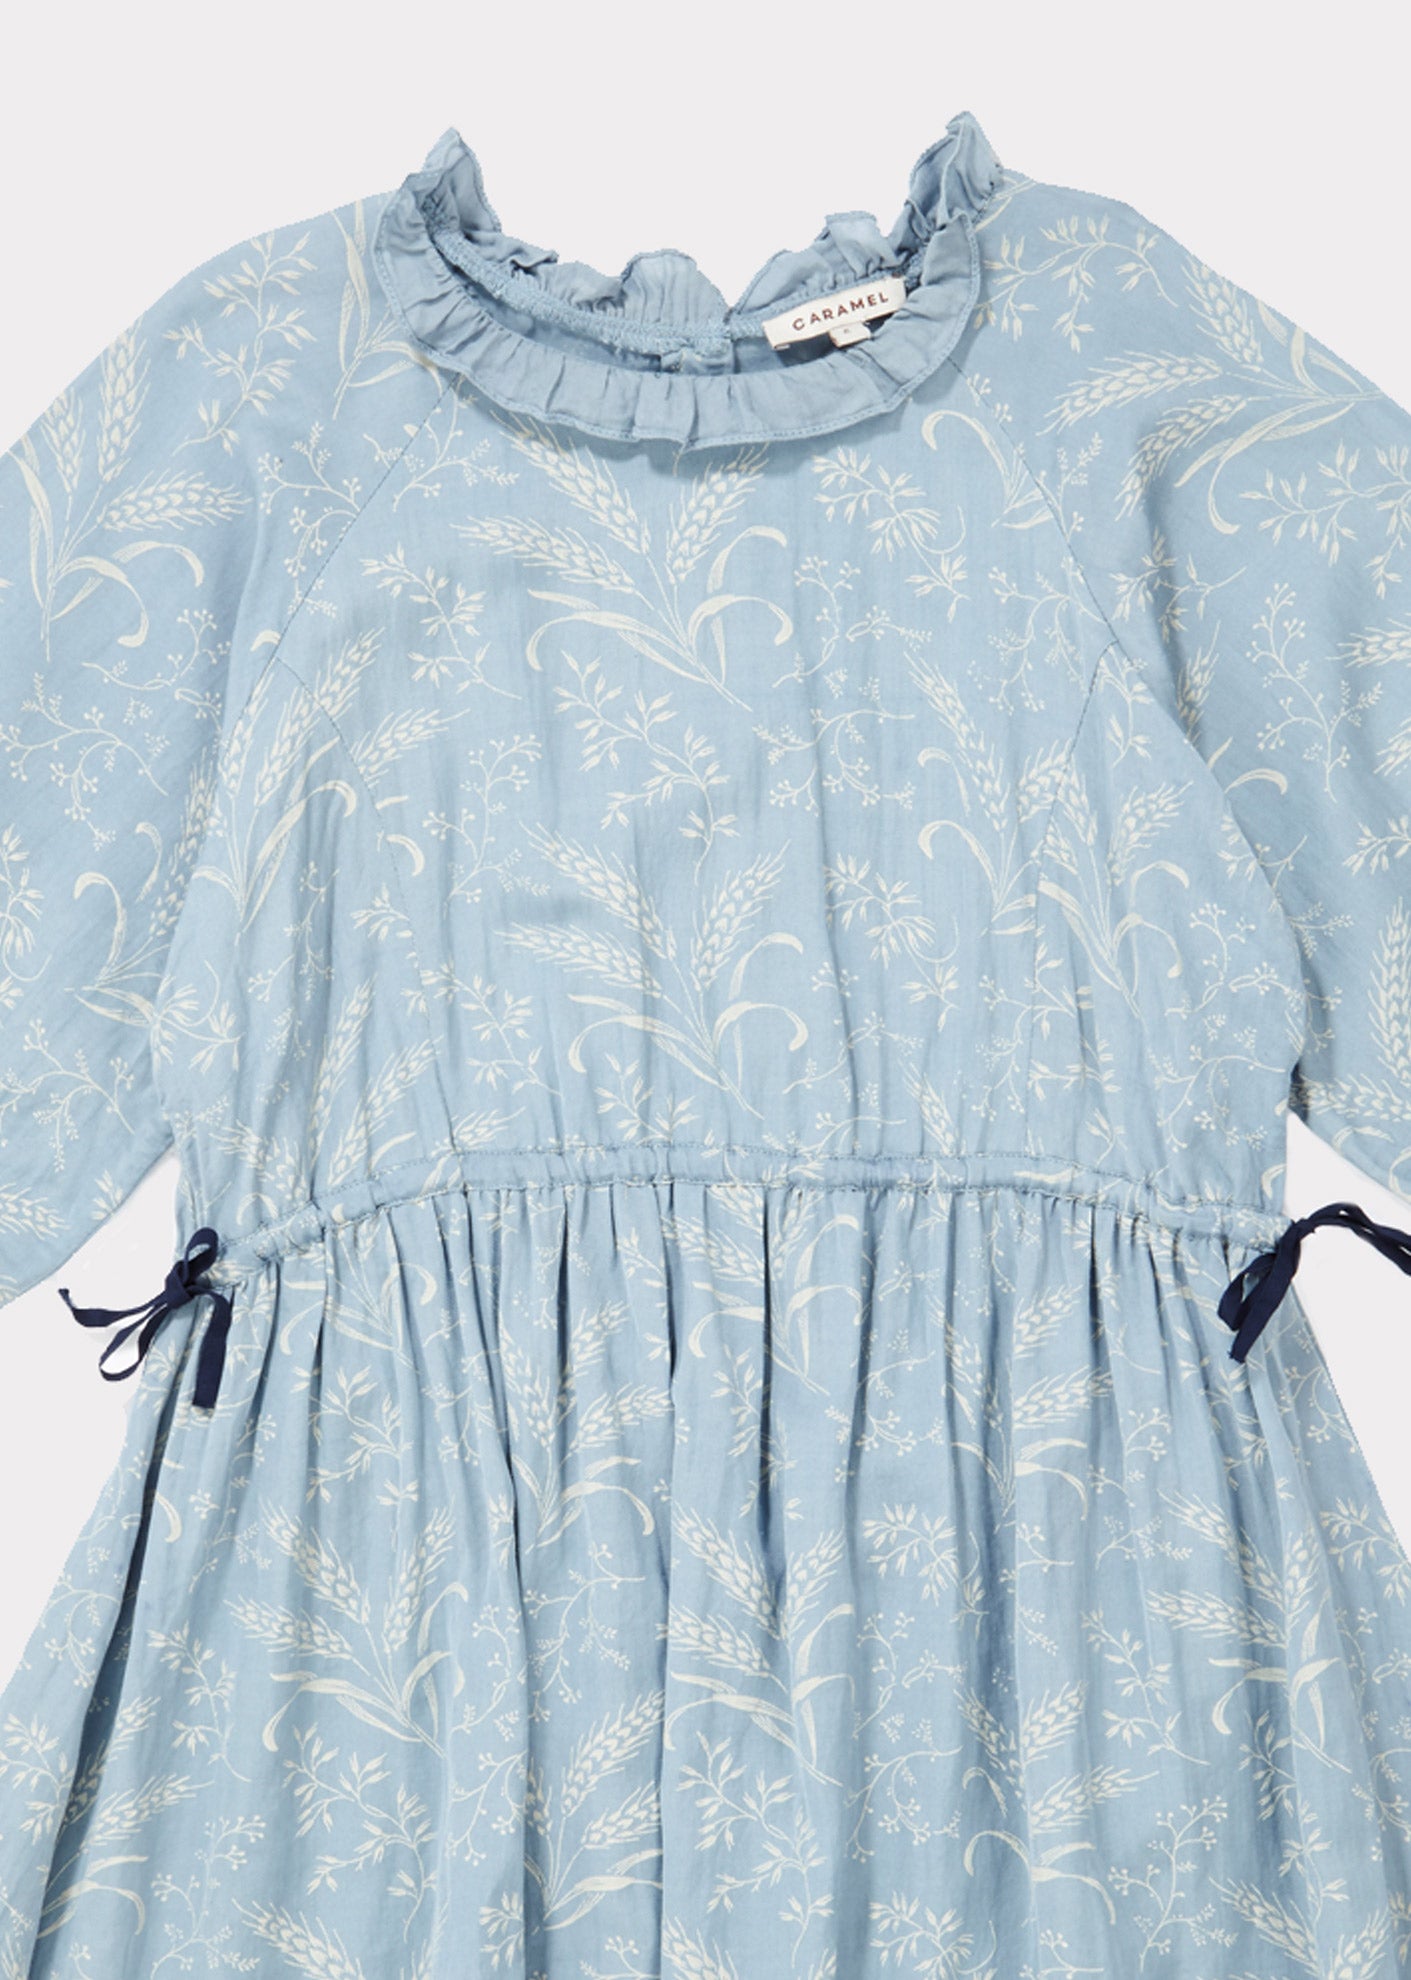 Girls Blue Printed Dress